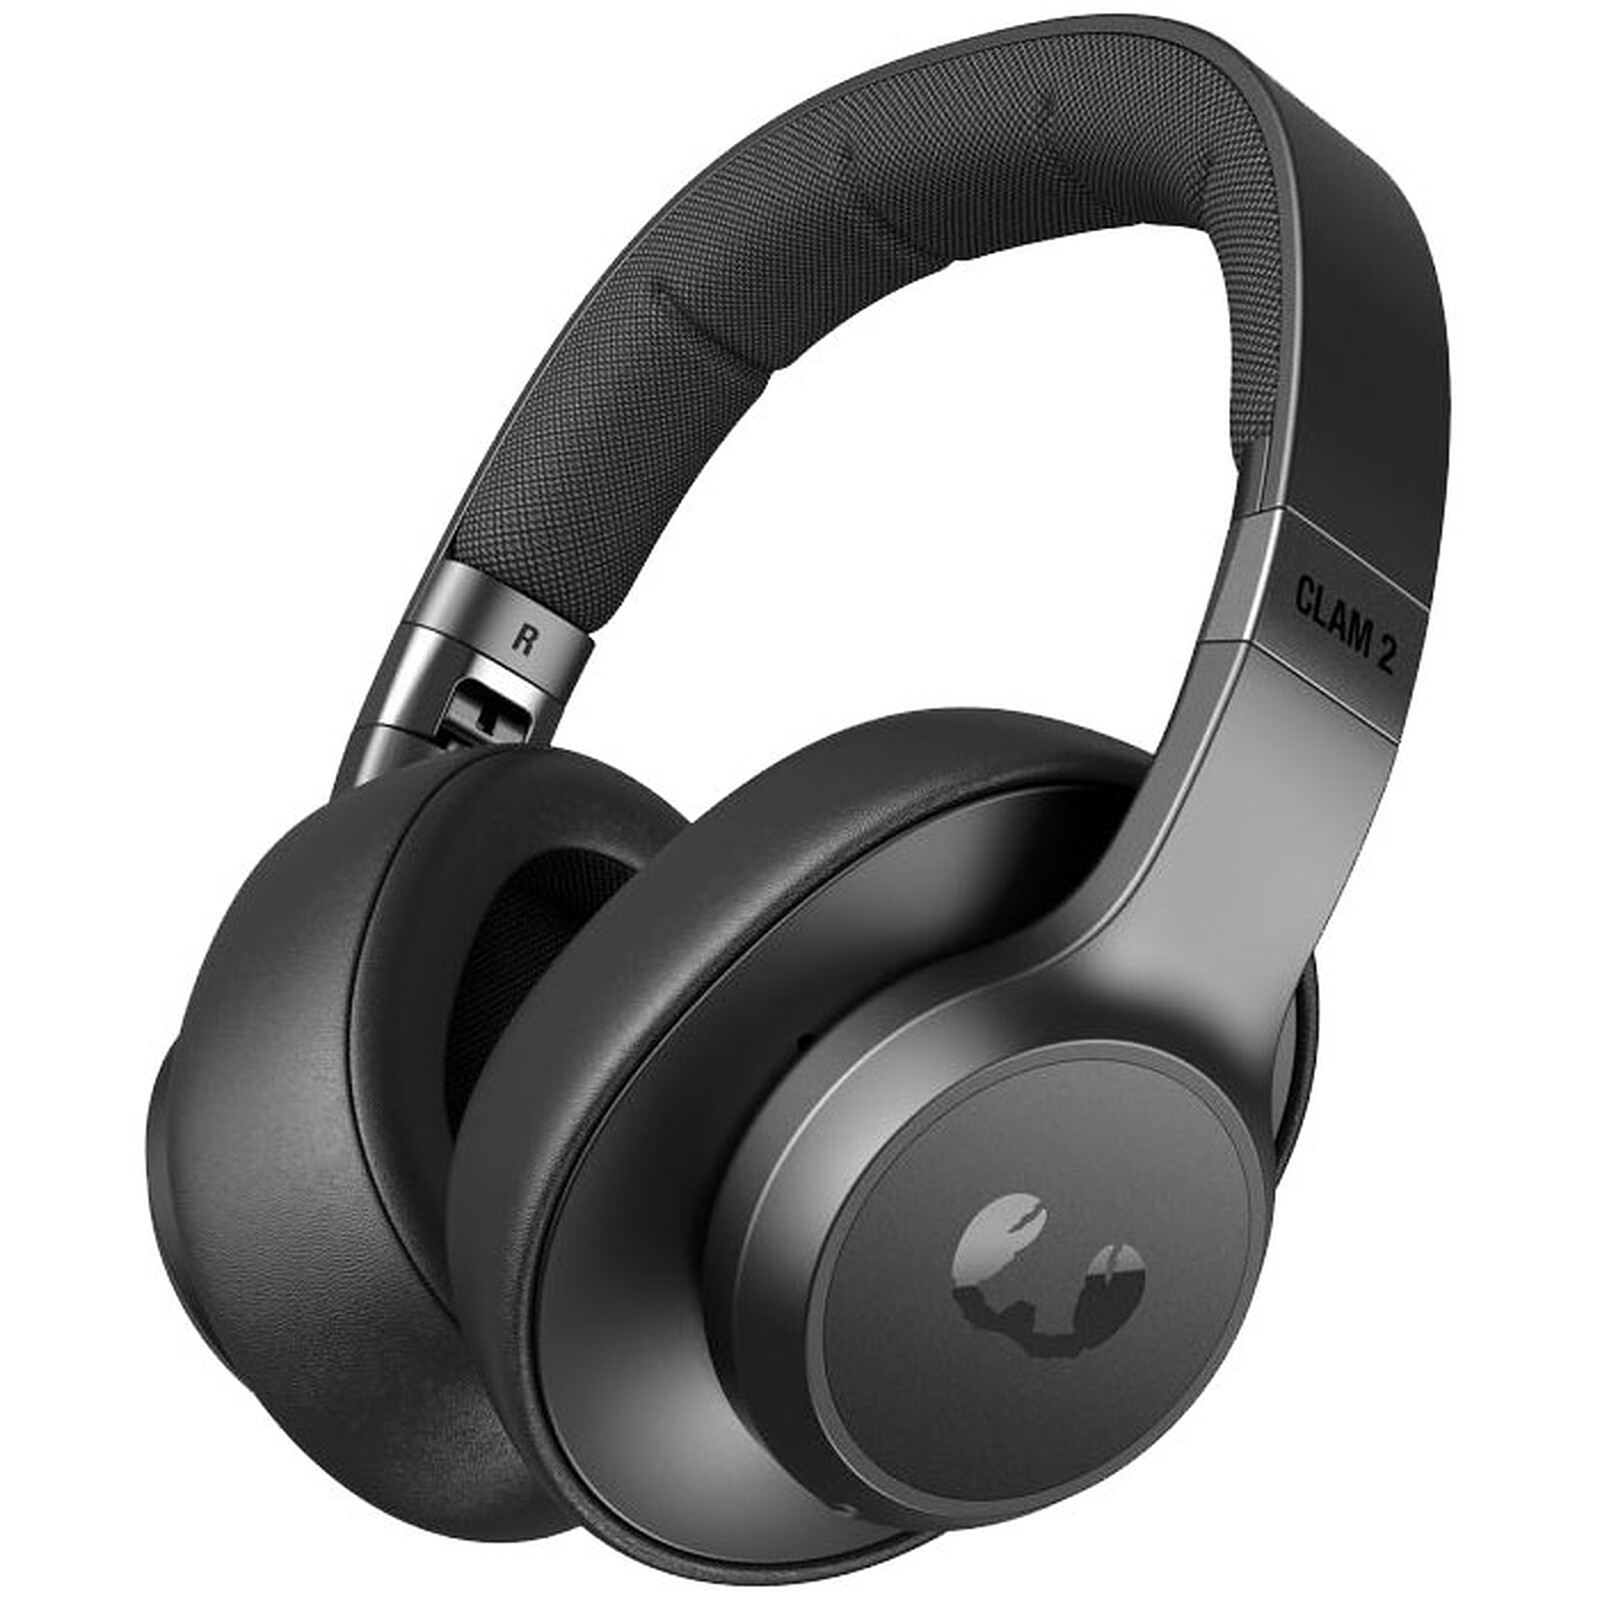 Fresh\'n Rebel Clam 2 Storm Grey - Headphones - LDLC 3-year warranty